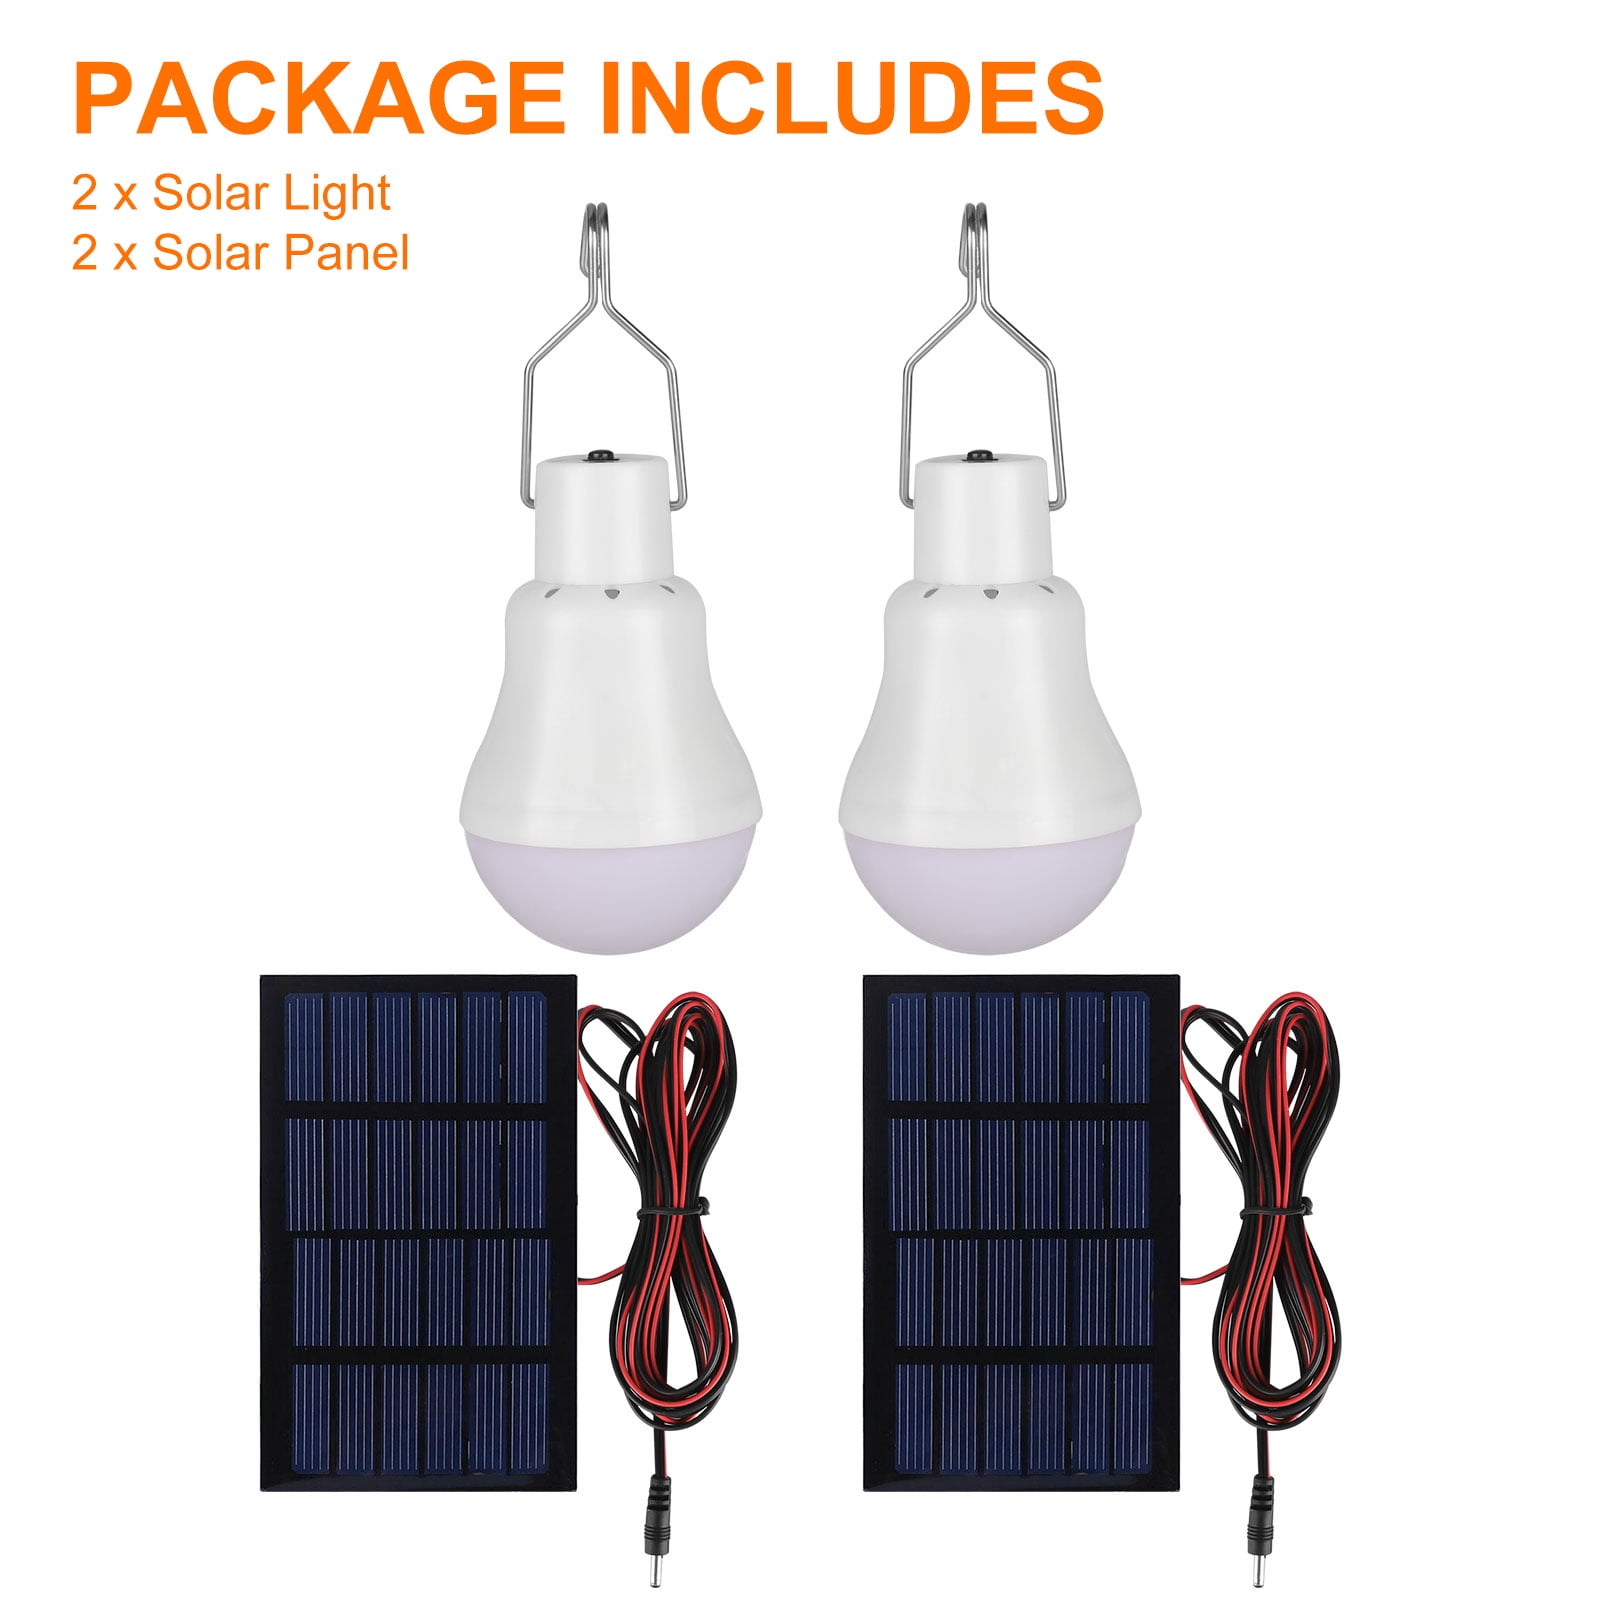 2 x Portable Solar Power LED Bulb Lamp Outdoor Lighting Camp Tent Fishing Light 